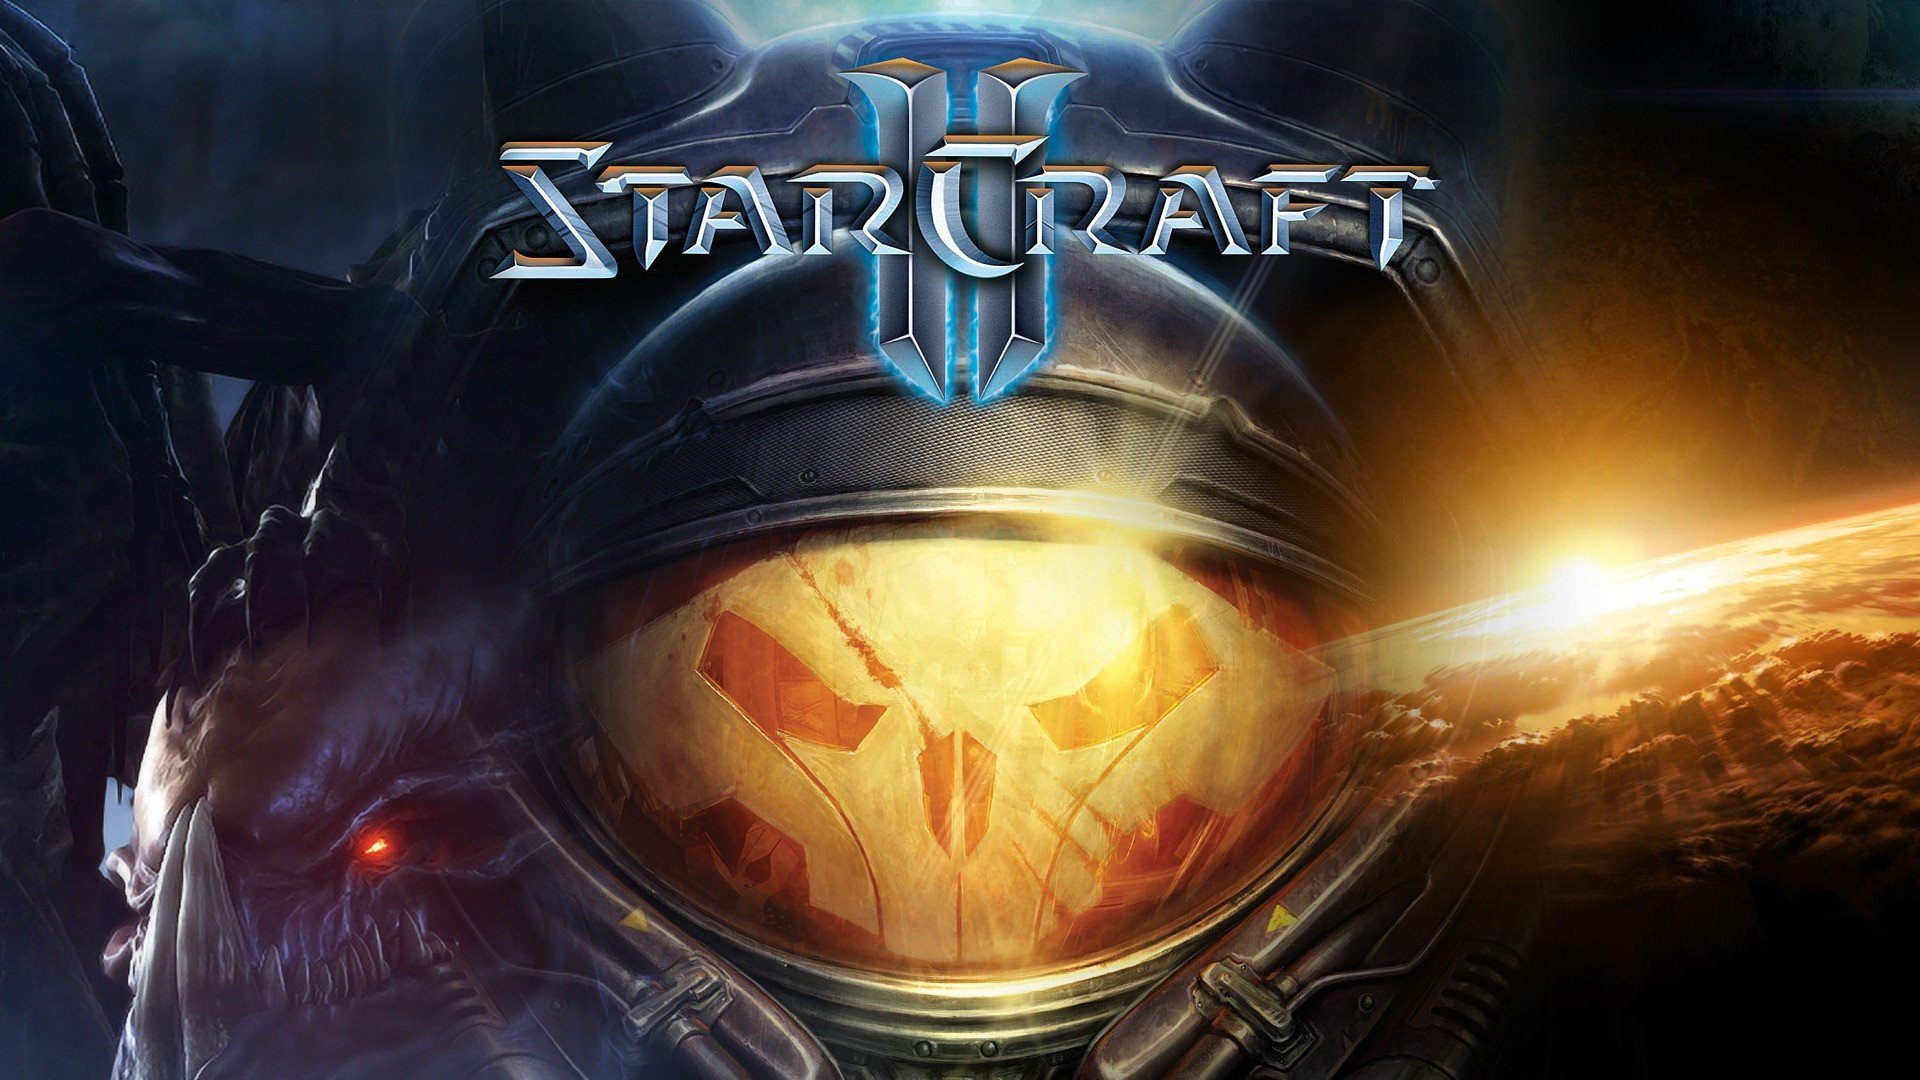 Starcraft II, Video games Wallpaper